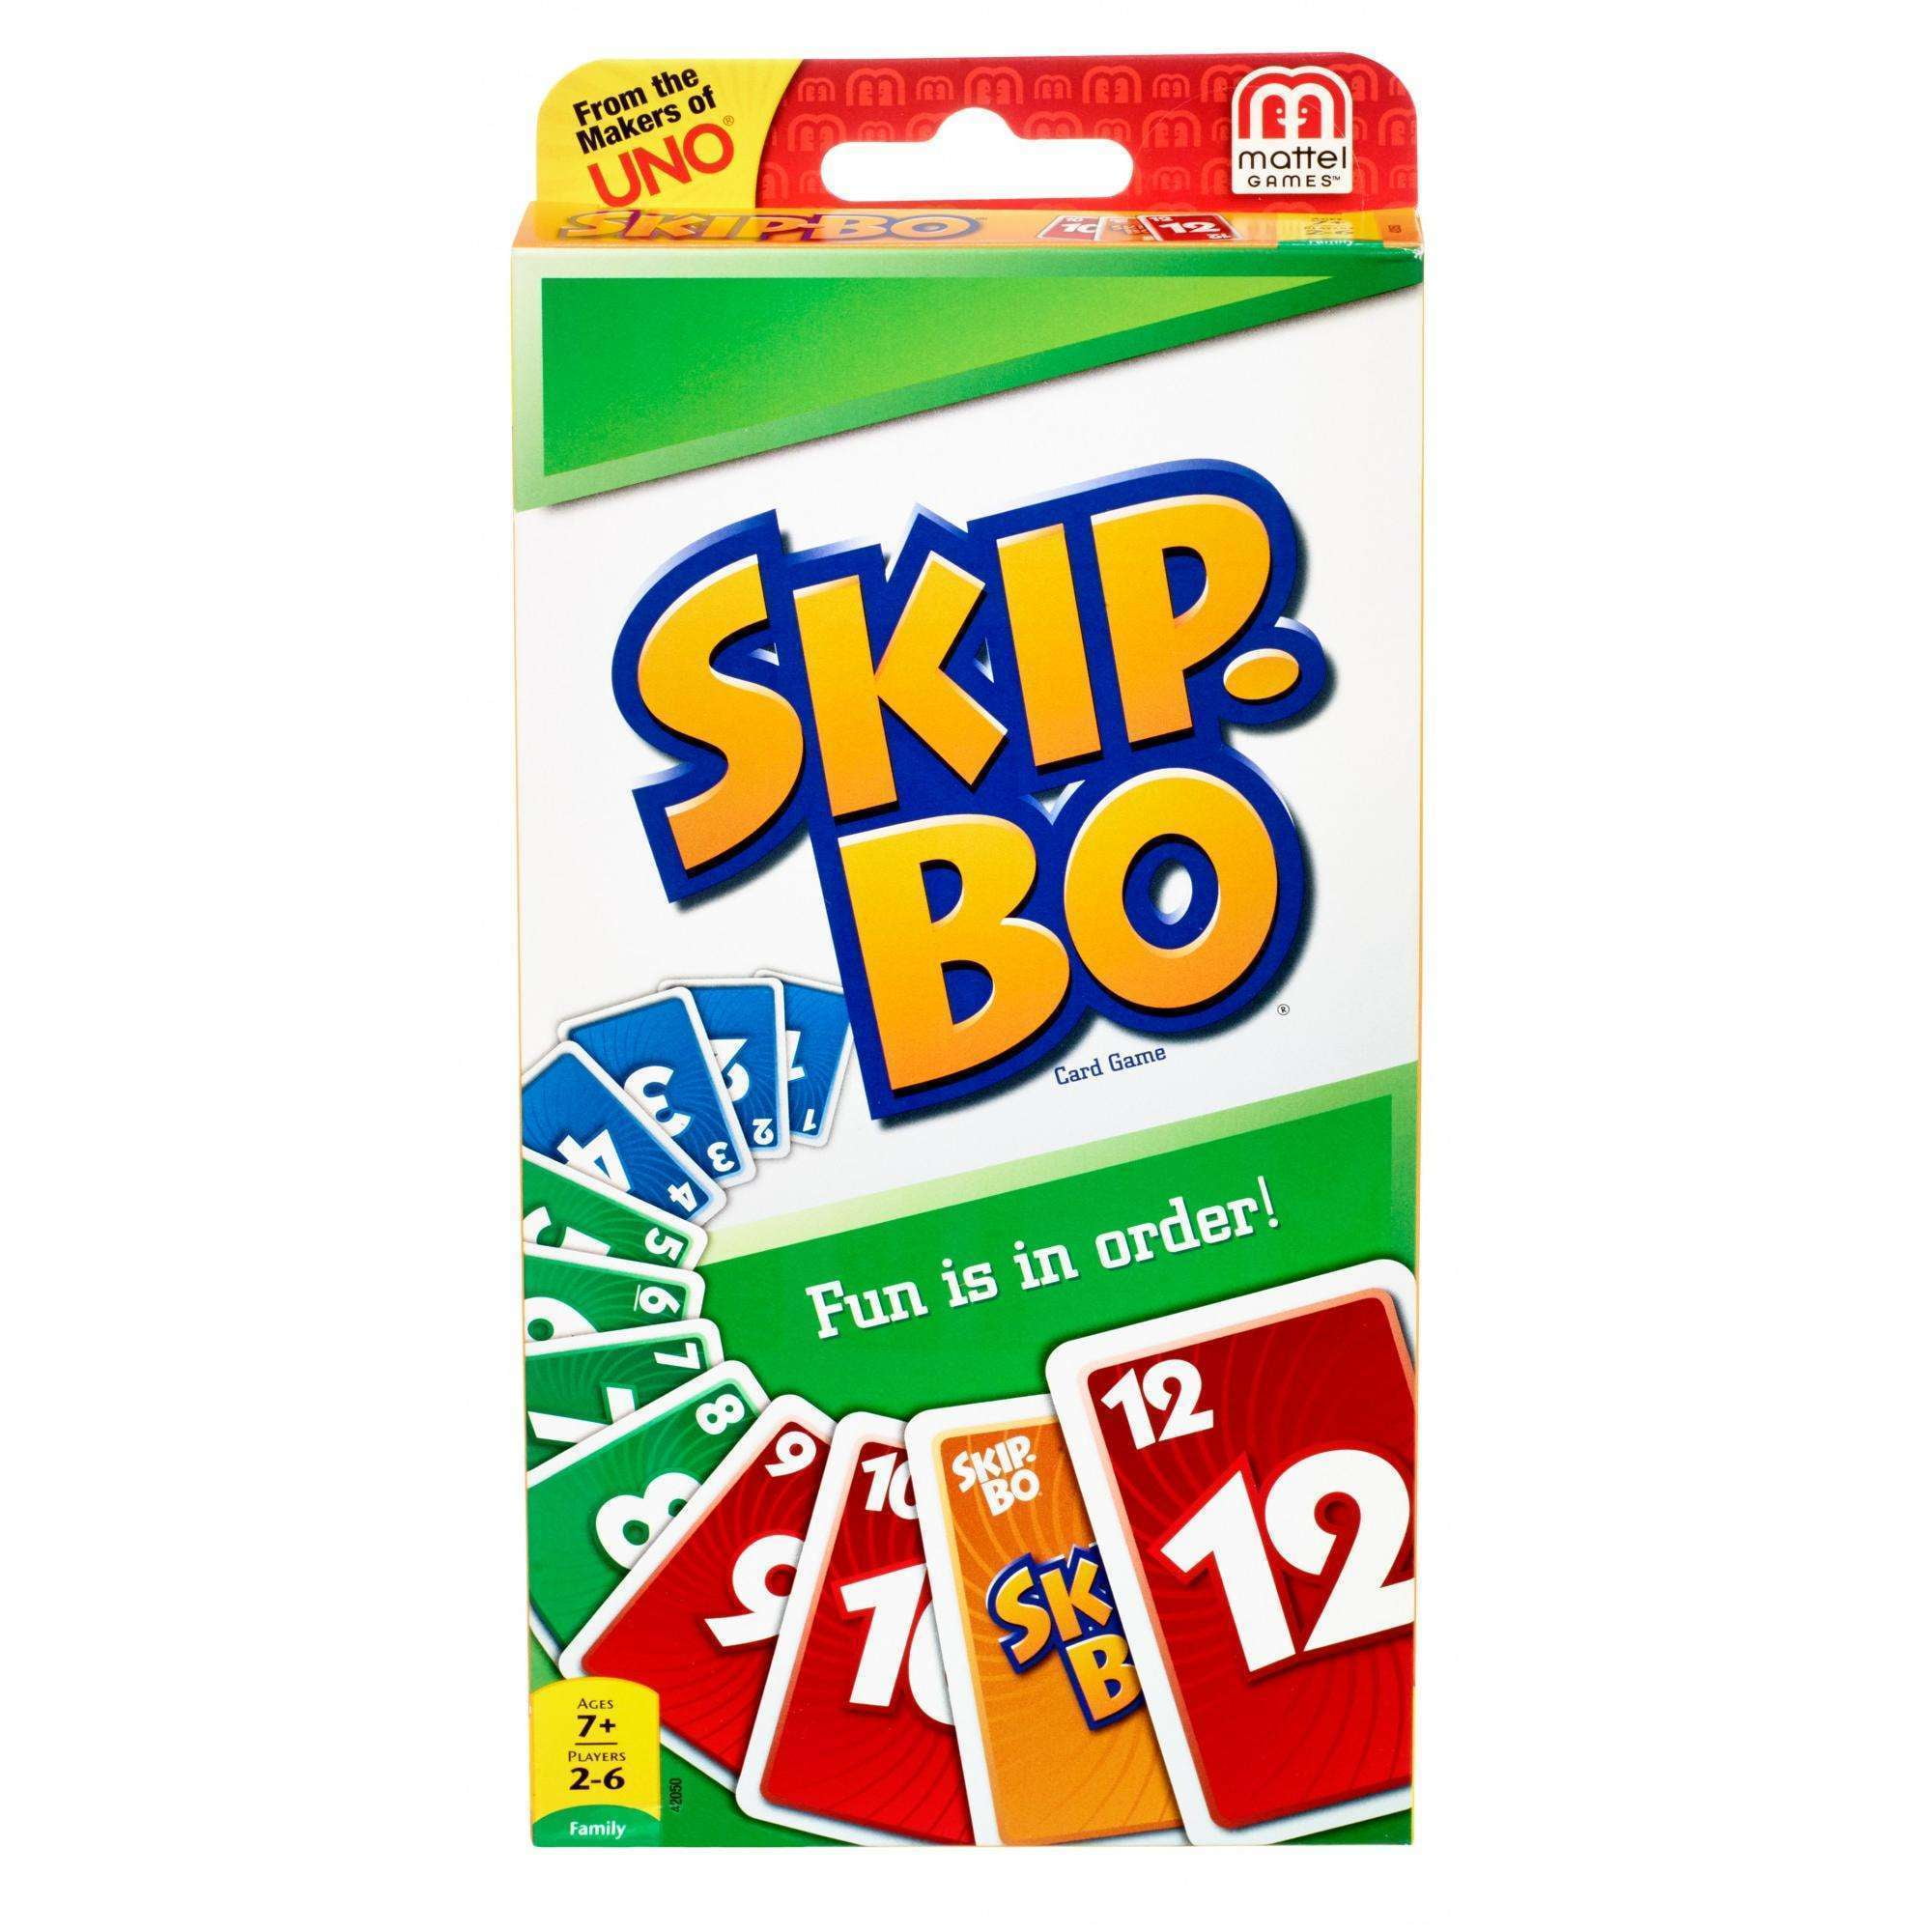 2011 SKIP-BO card game new SEALED Mattel Dented Box 